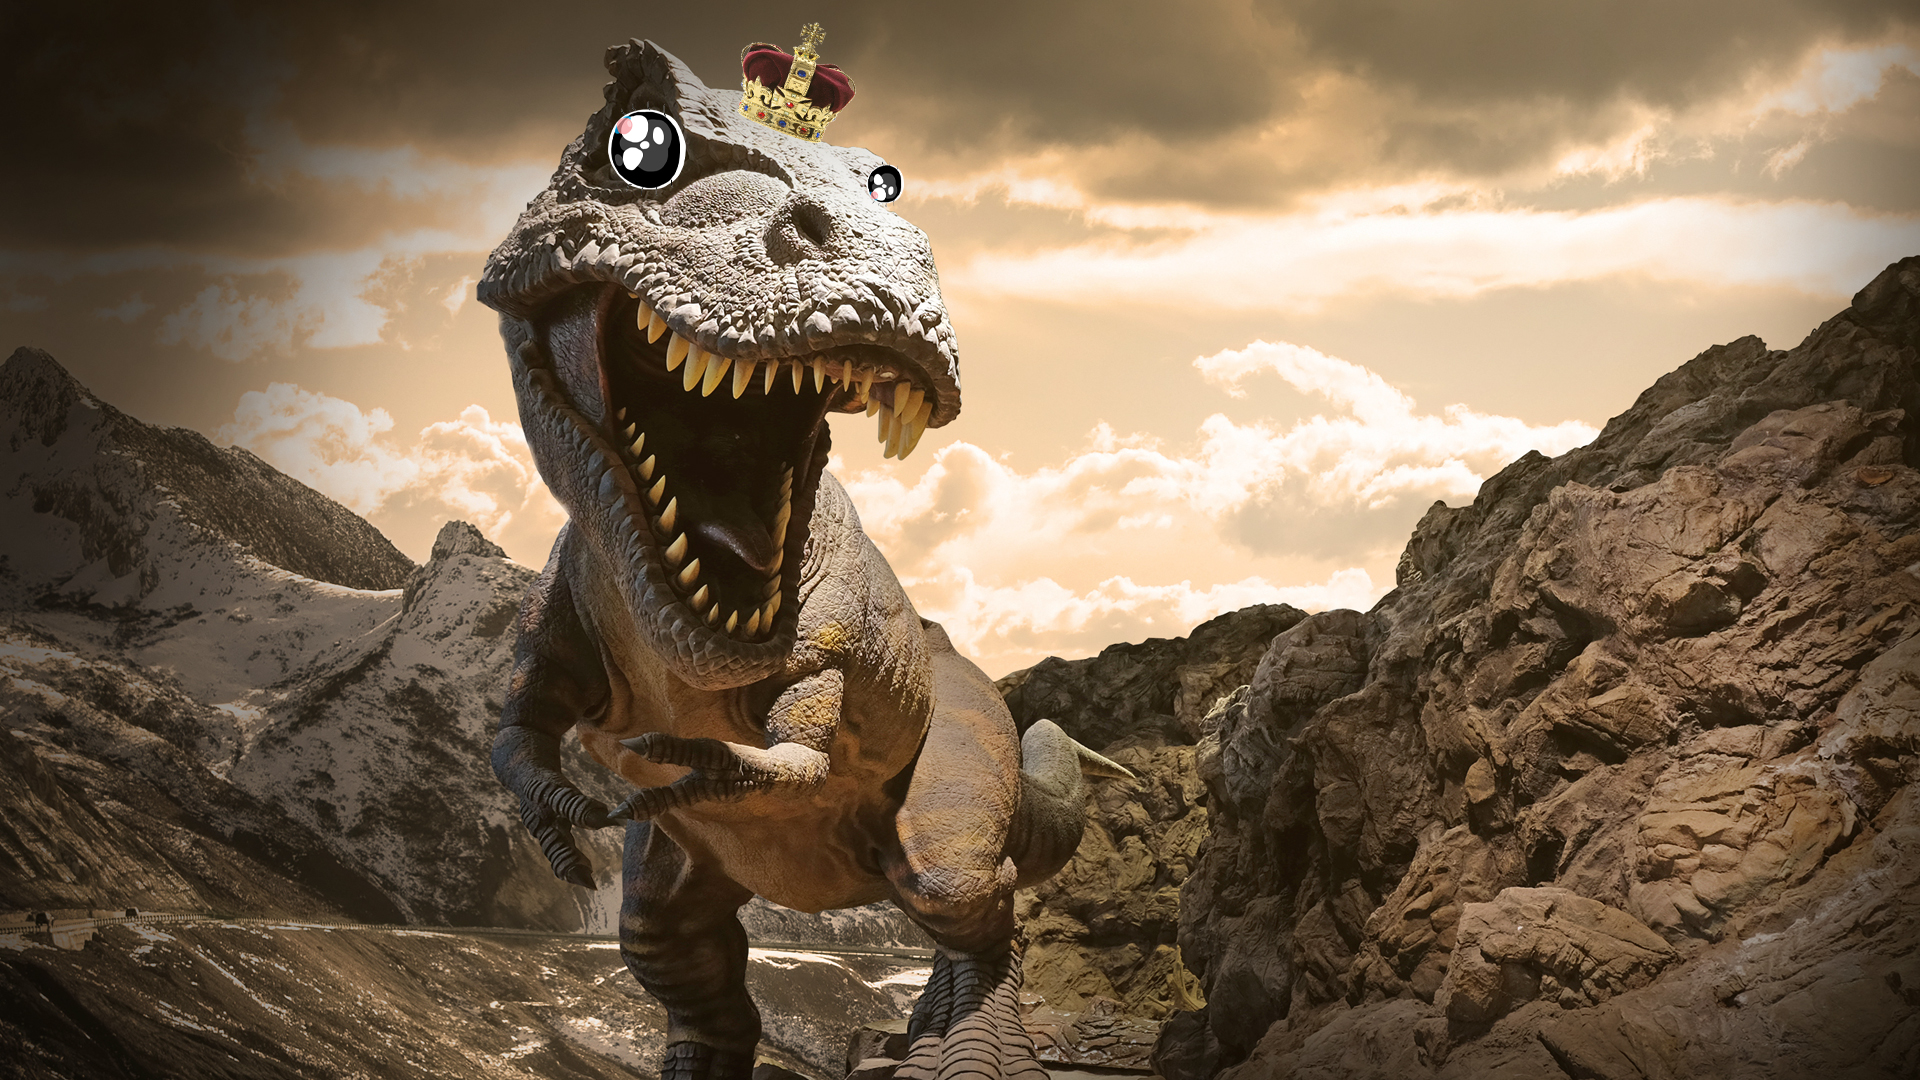 T-rex wearing a crown